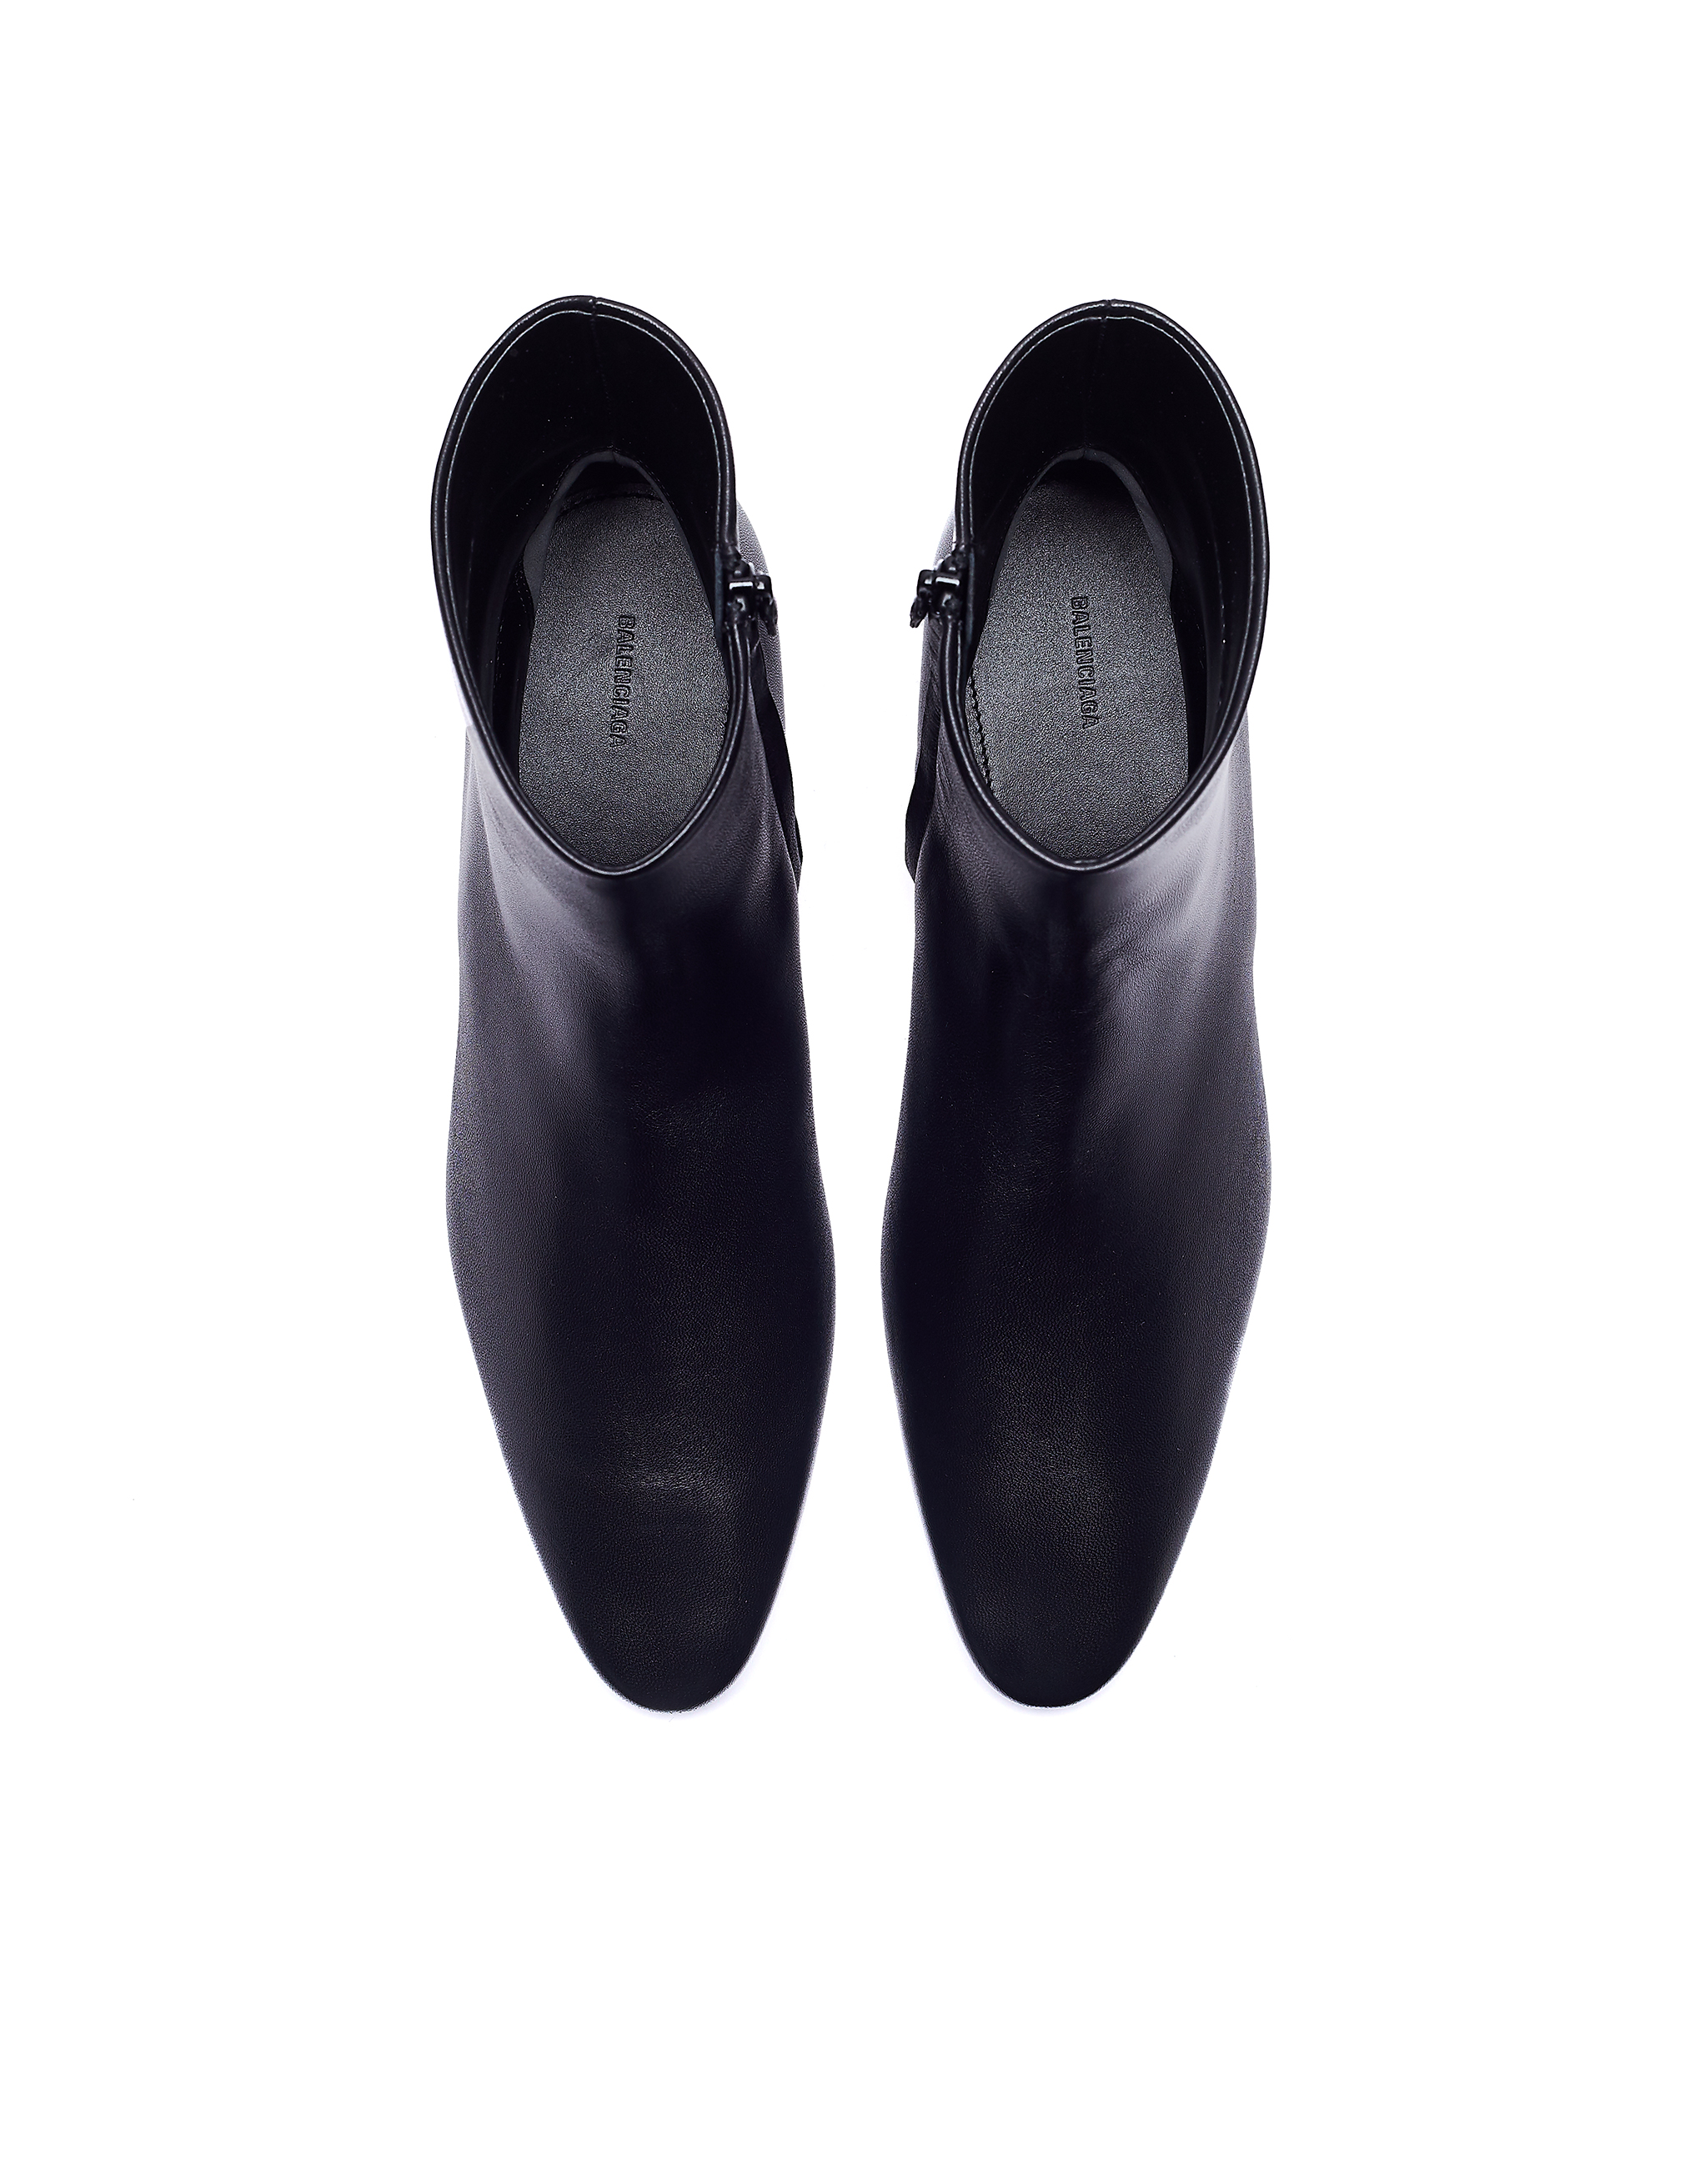 ZOOFASHIONS on X: @BALENCIAGA Strike 20mm Black Boots:   #balenciaga #balenciagalover #balenciagaparis  #demnagvasalia #highfashion #stylegram #instagood #luxurious #luxury  #luxurylifestyle #fashion #style #instastyle #styleformen